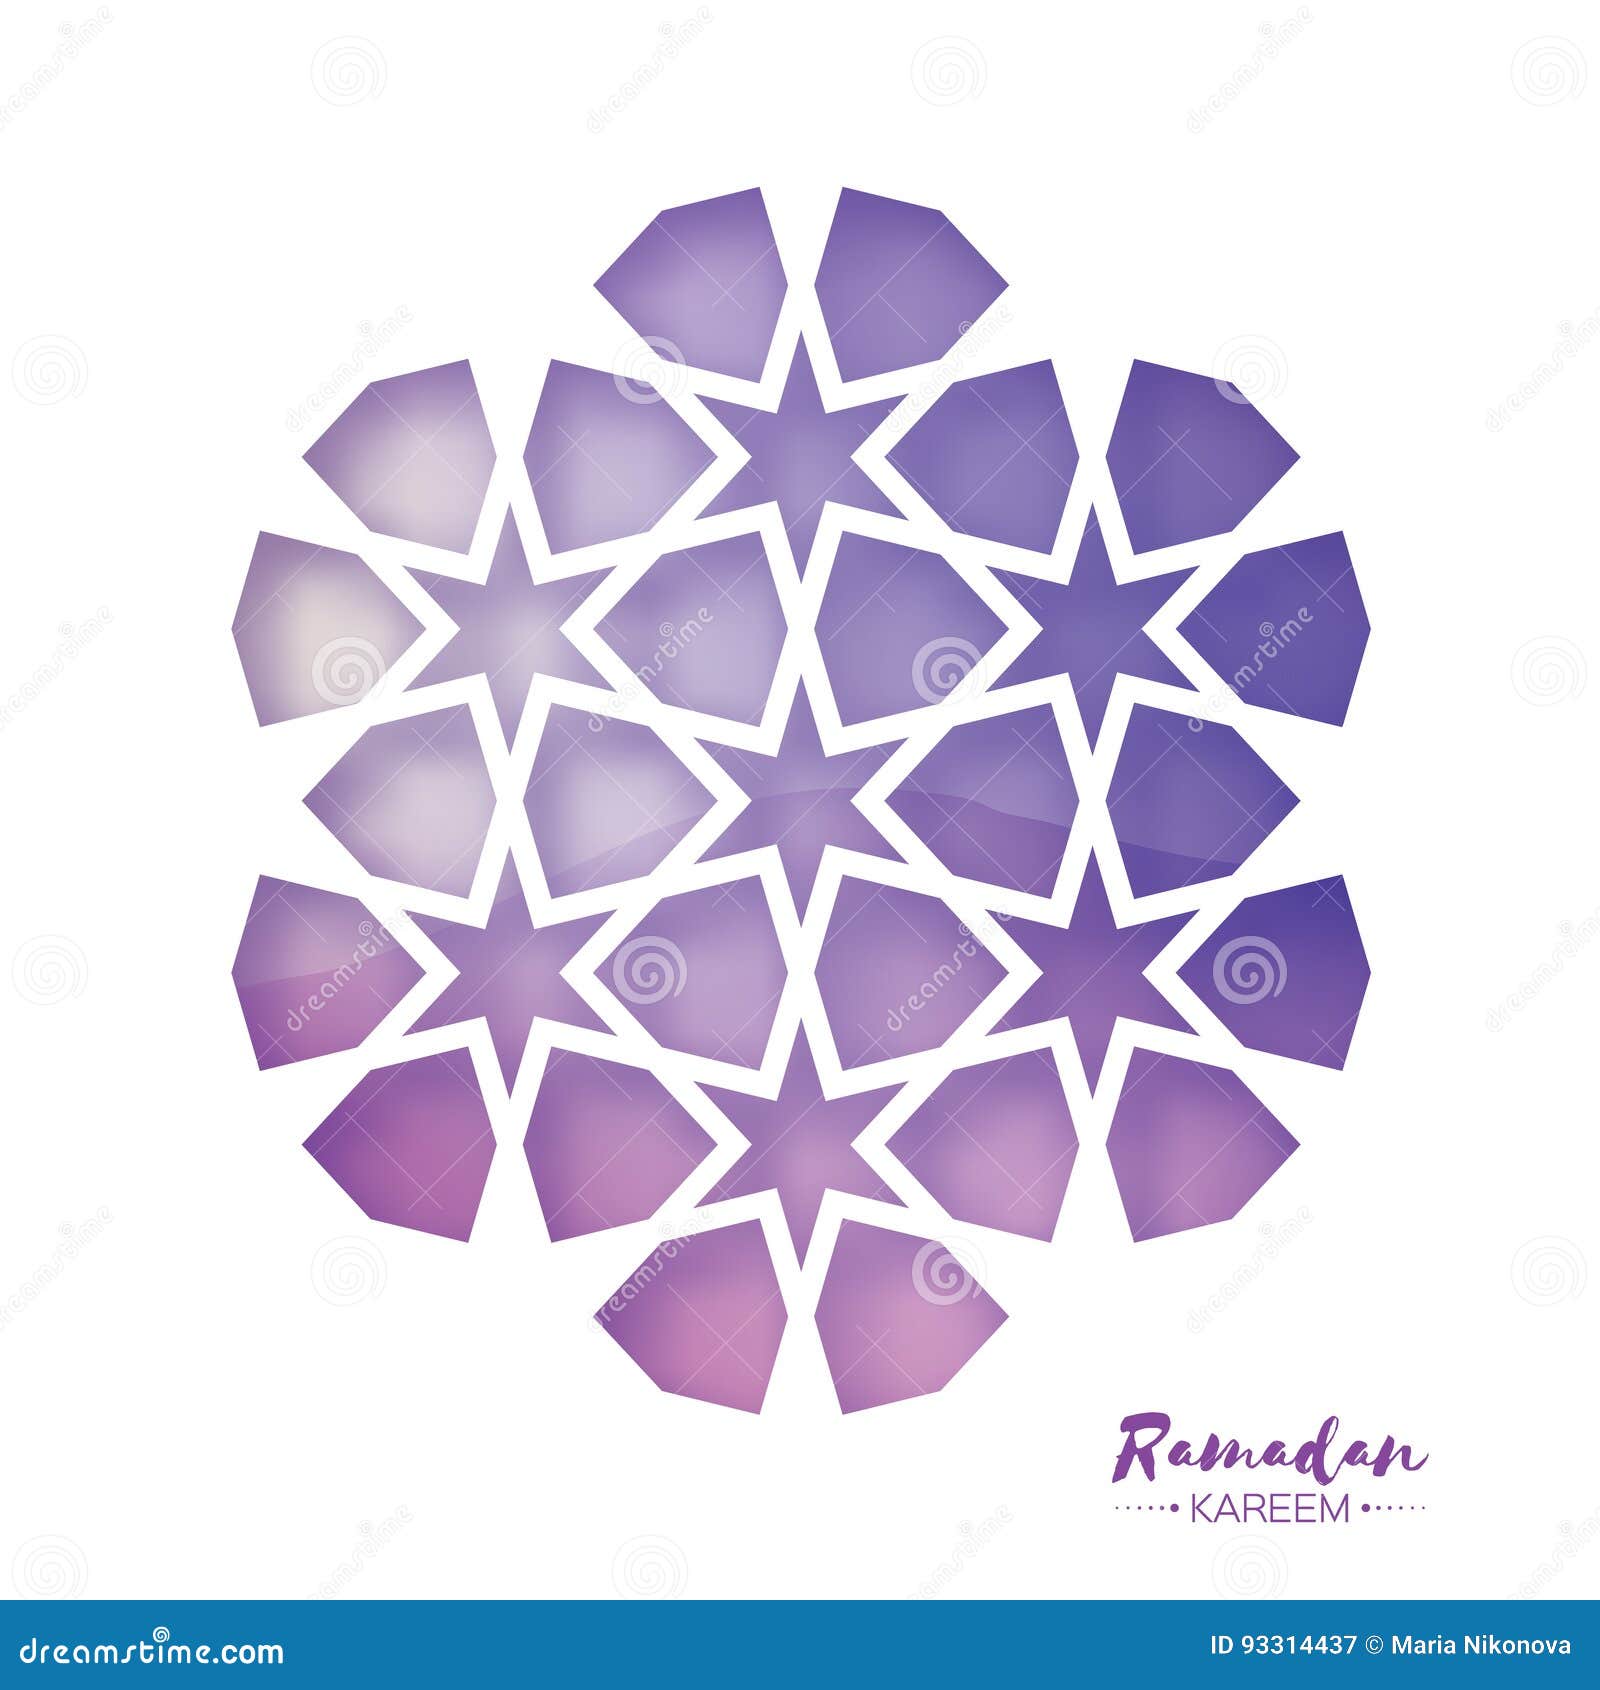 ramadan kareem greeting card . purple origami arabesque mosque window. arabic ornamental pattern in paper cut style.holy